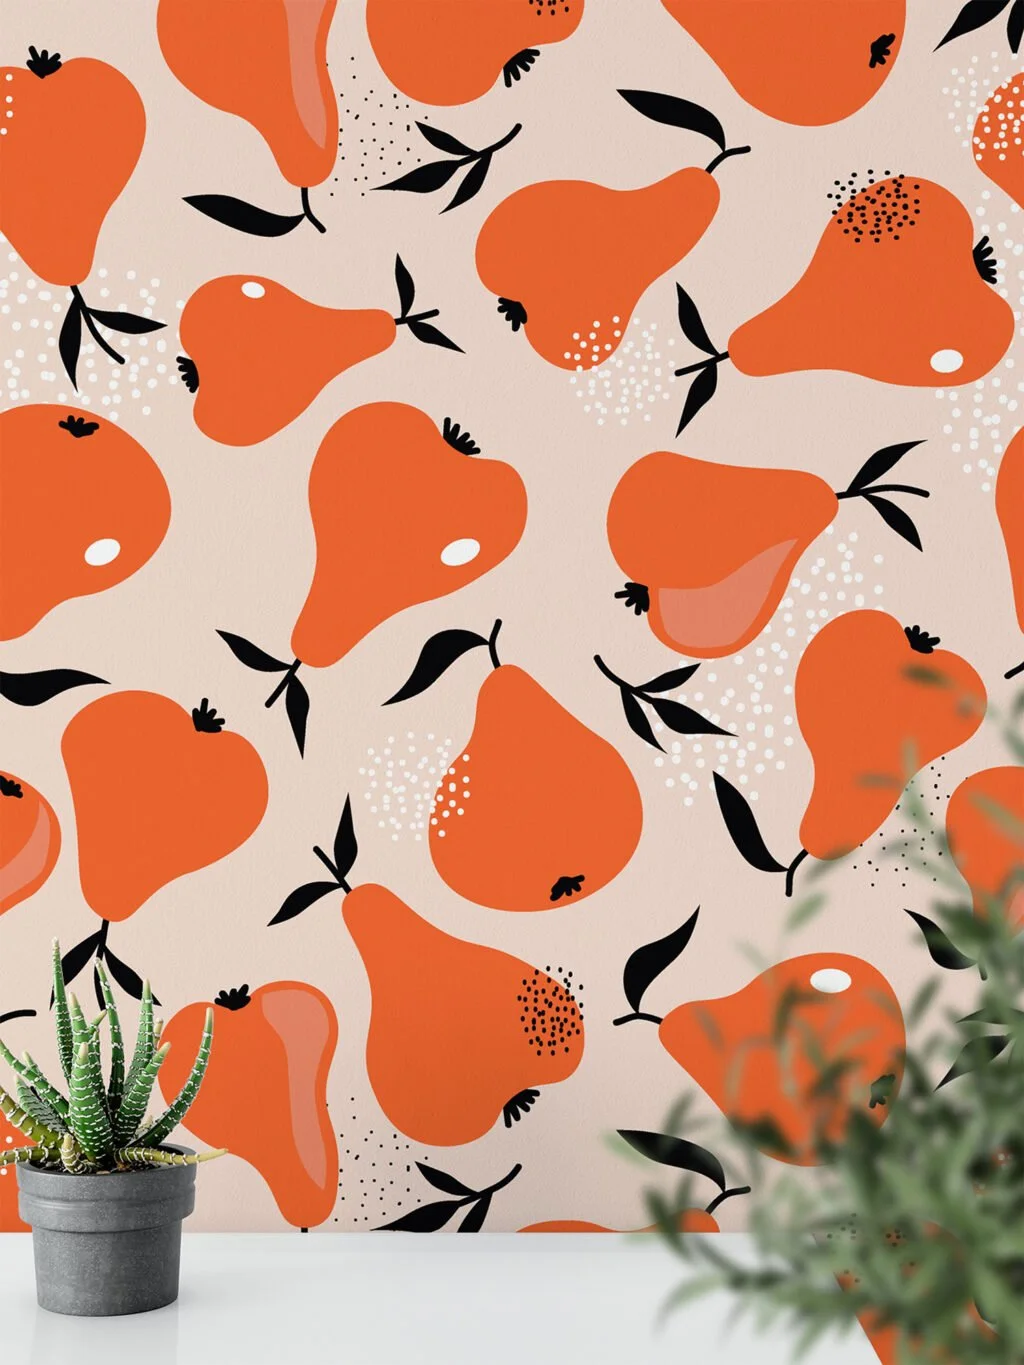 Simple Orange Pears Pattern Illustration Wallpaper, Abstract Autumn Pears Peel & Stick Wall Mural